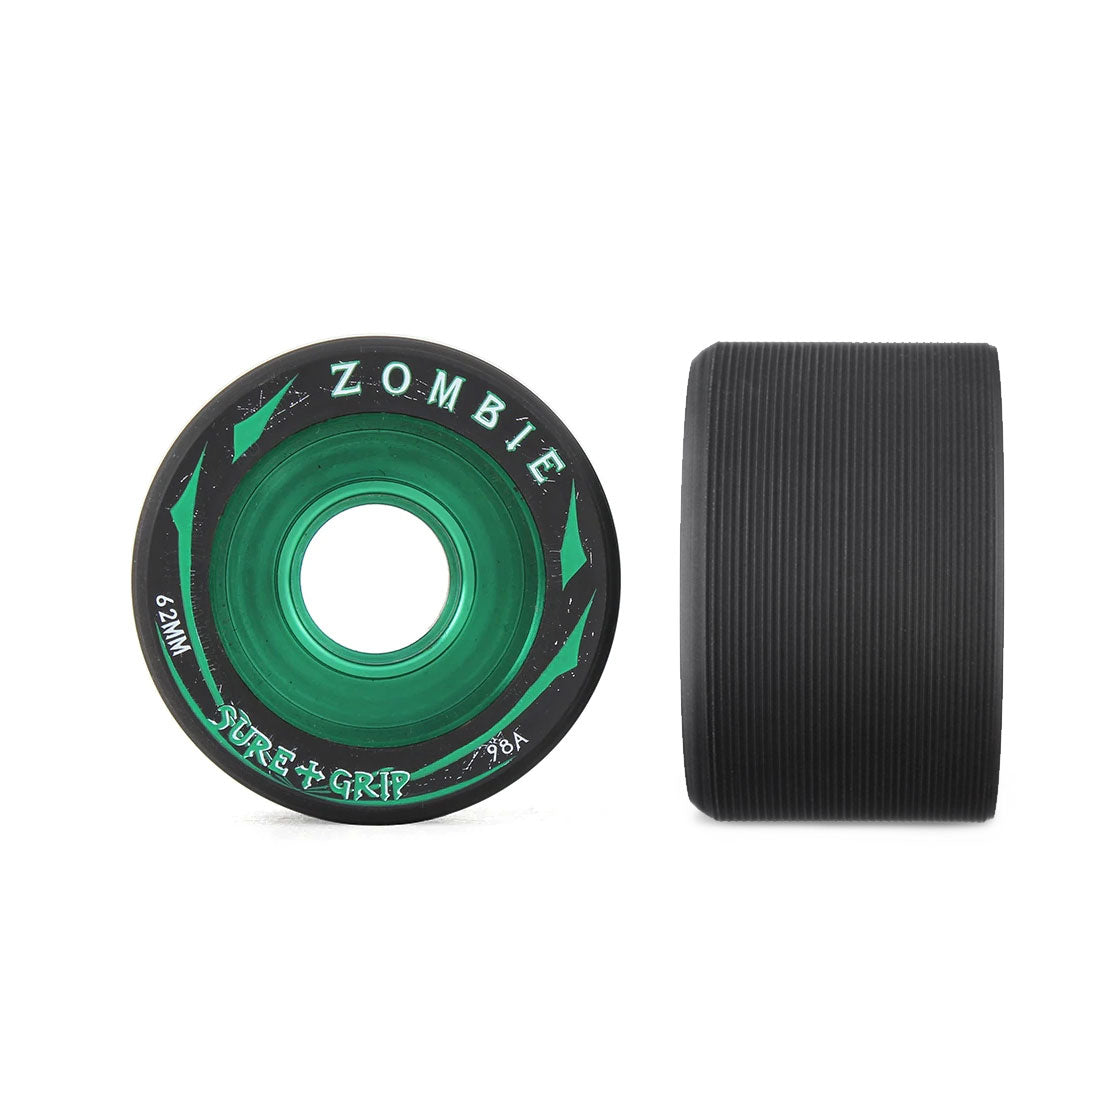 Sure-Grip Zombie Max 62x44mm 4pk Green 98A Roller Skate Wheels